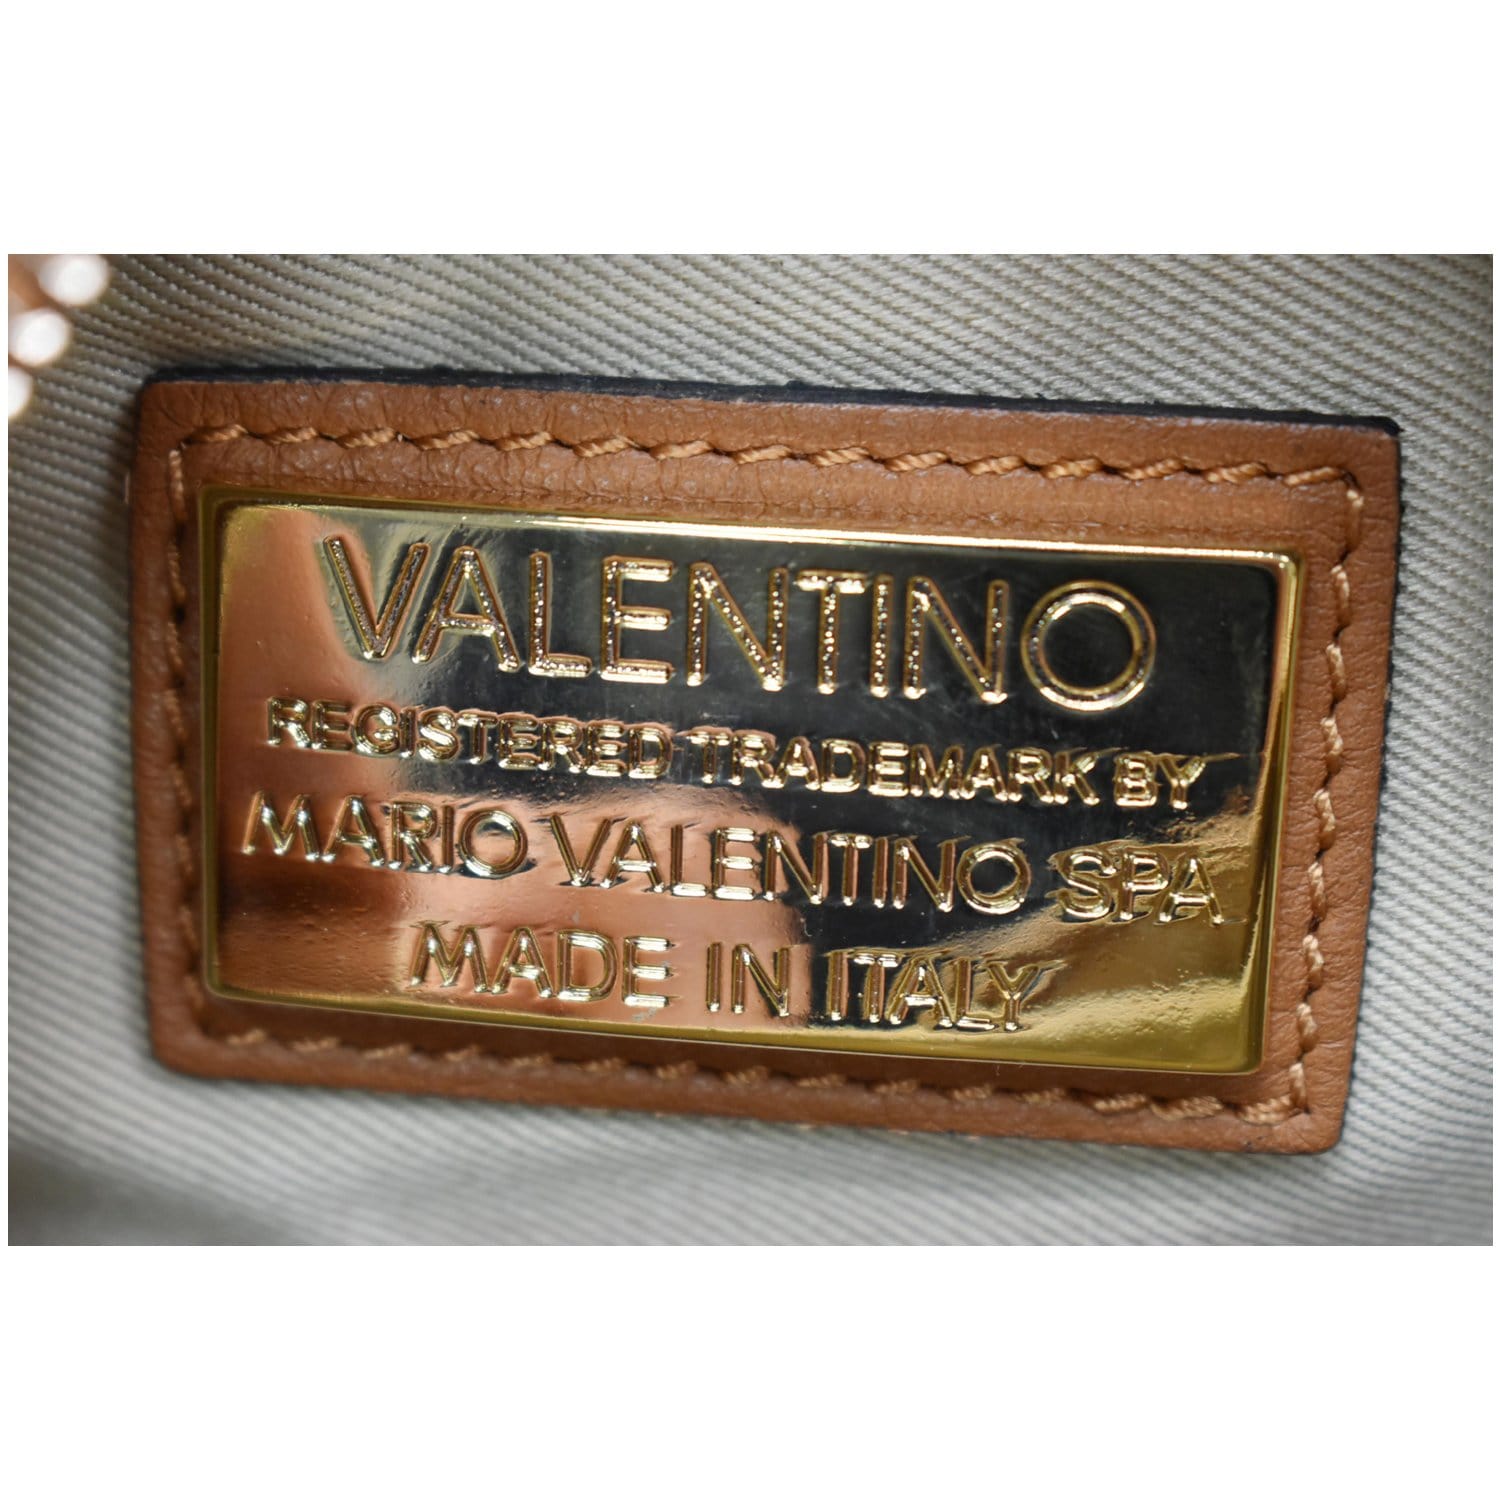 Is Valentino by Mario Valentino a luxury brand?